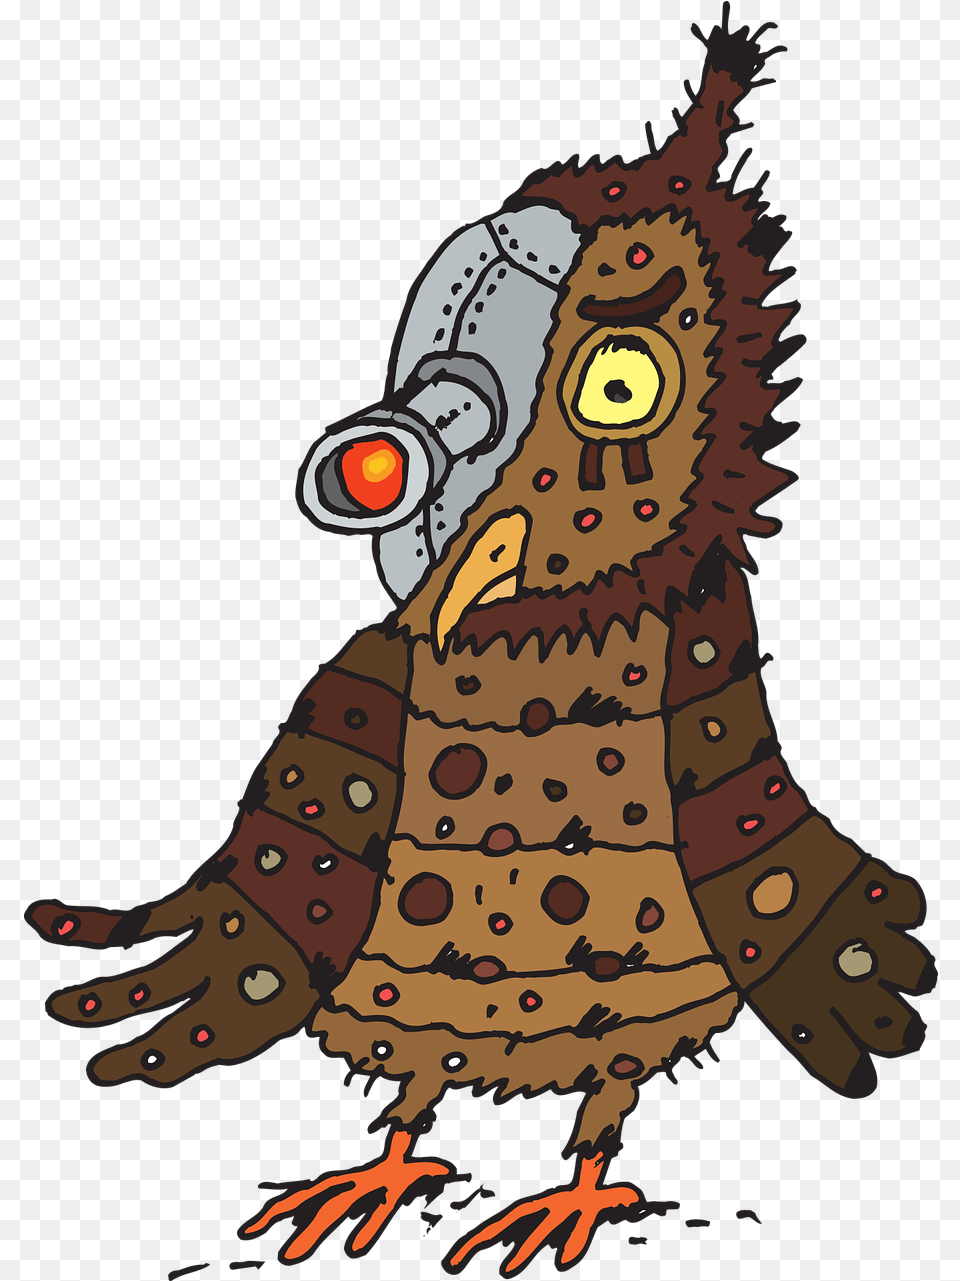 Owl Terminator Bird Vector Graphic On Pixabay Owl Terminator, Animal, Dinosaur, Reptile, Face Png